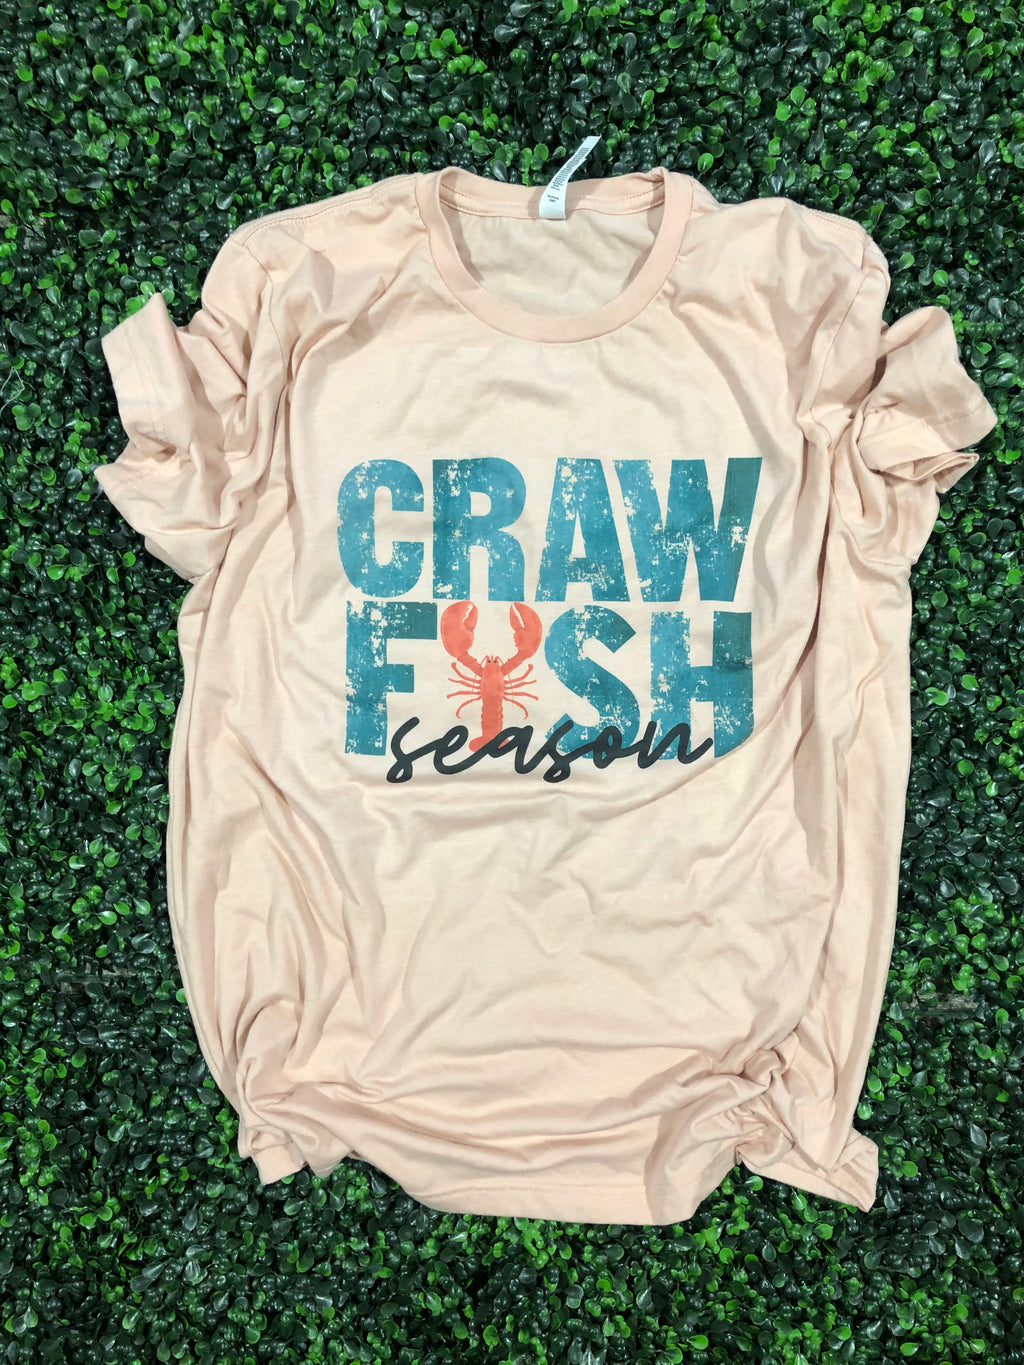 Blue Crawfish Season Top Design